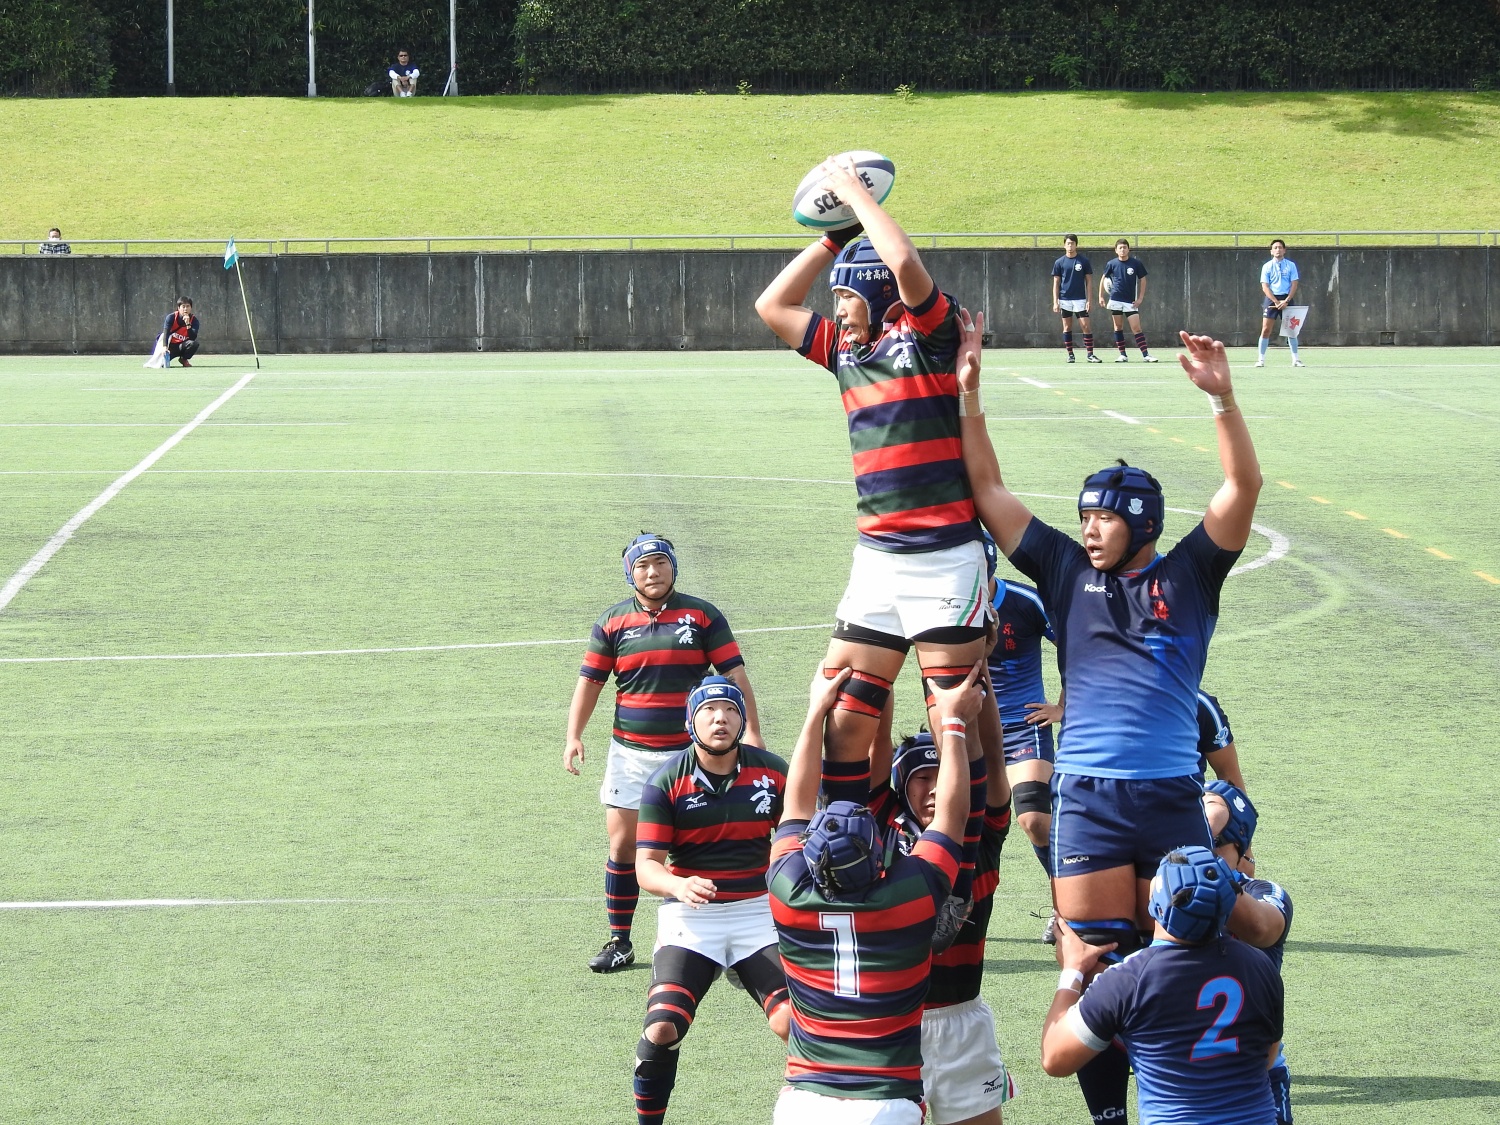 http://kokura-rugby.sakura.ne.jp/DSCN8141_xlarge.JPG